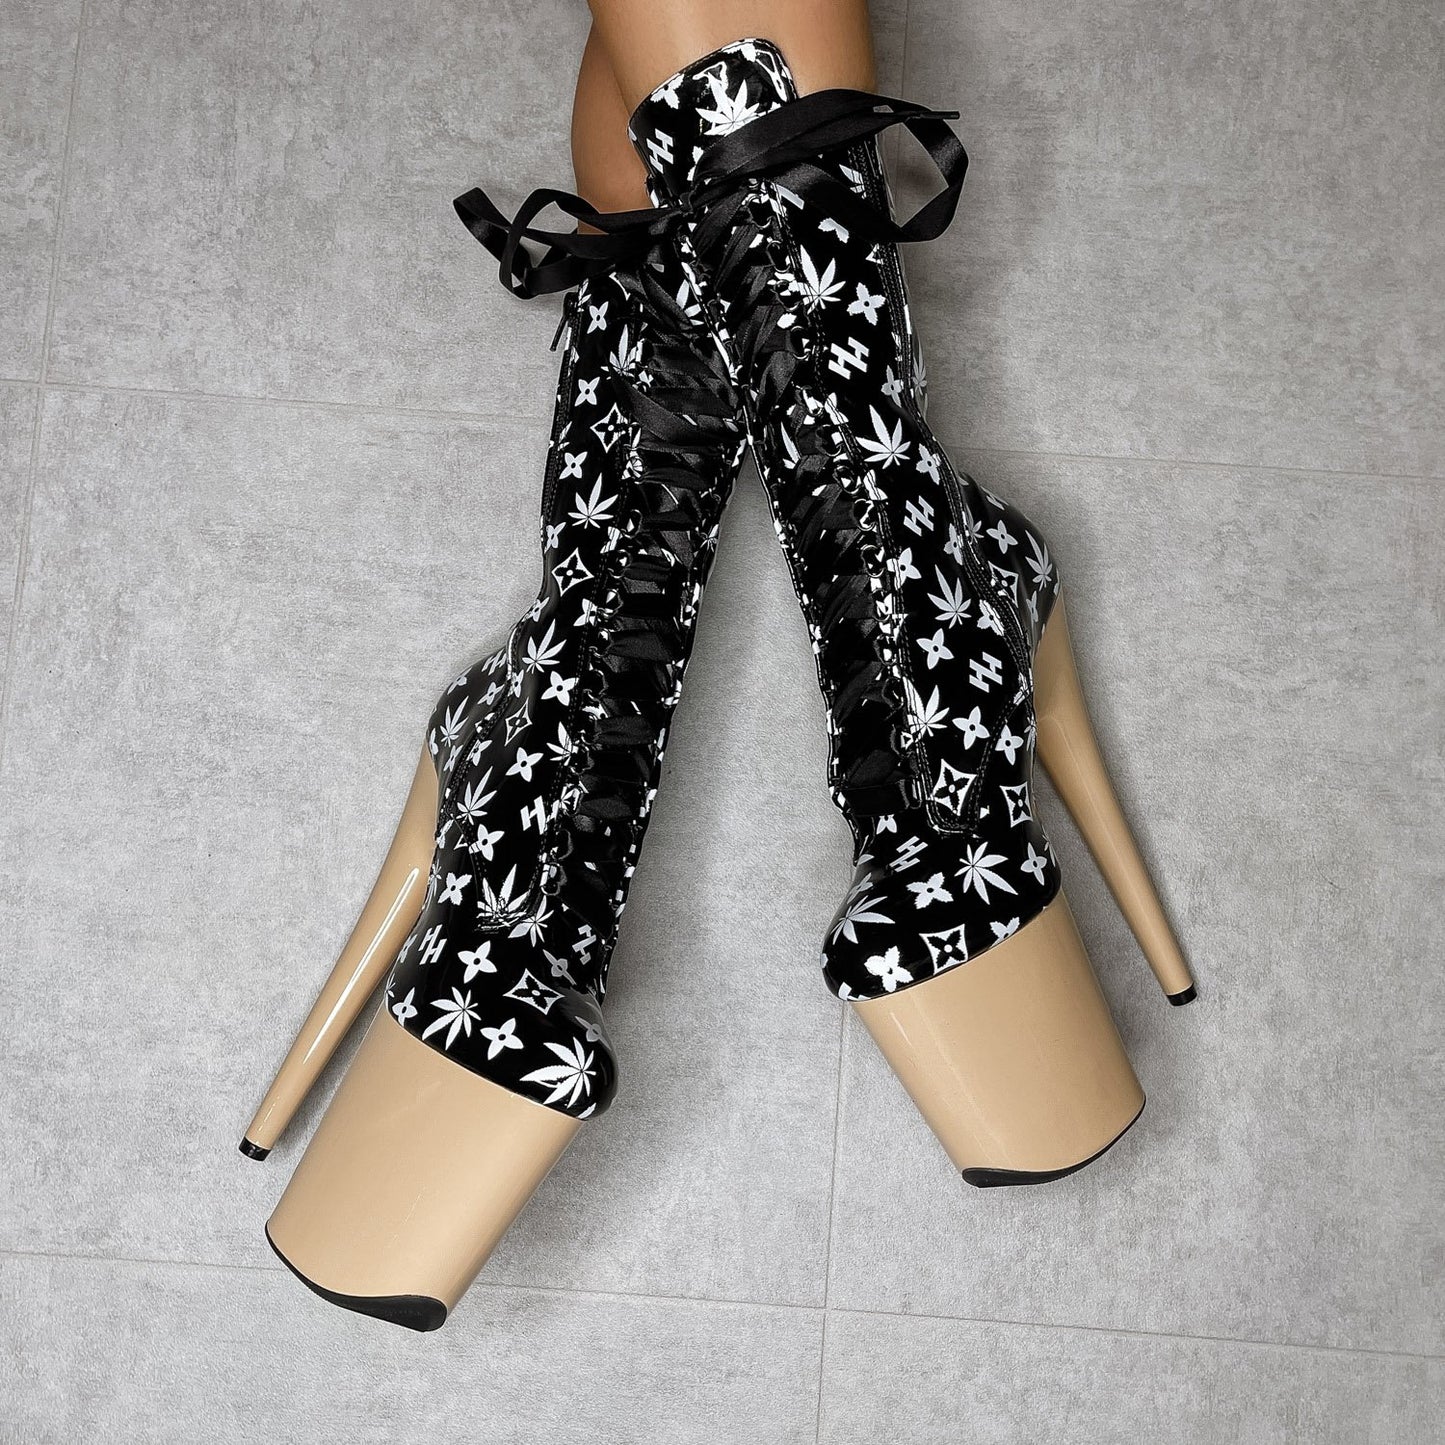 Branded Boot - Black/Sand - 8 INCH, stripper shoe, stripper heel, pole heel, not a pleaser, platform, dancer, pole dance, floor work